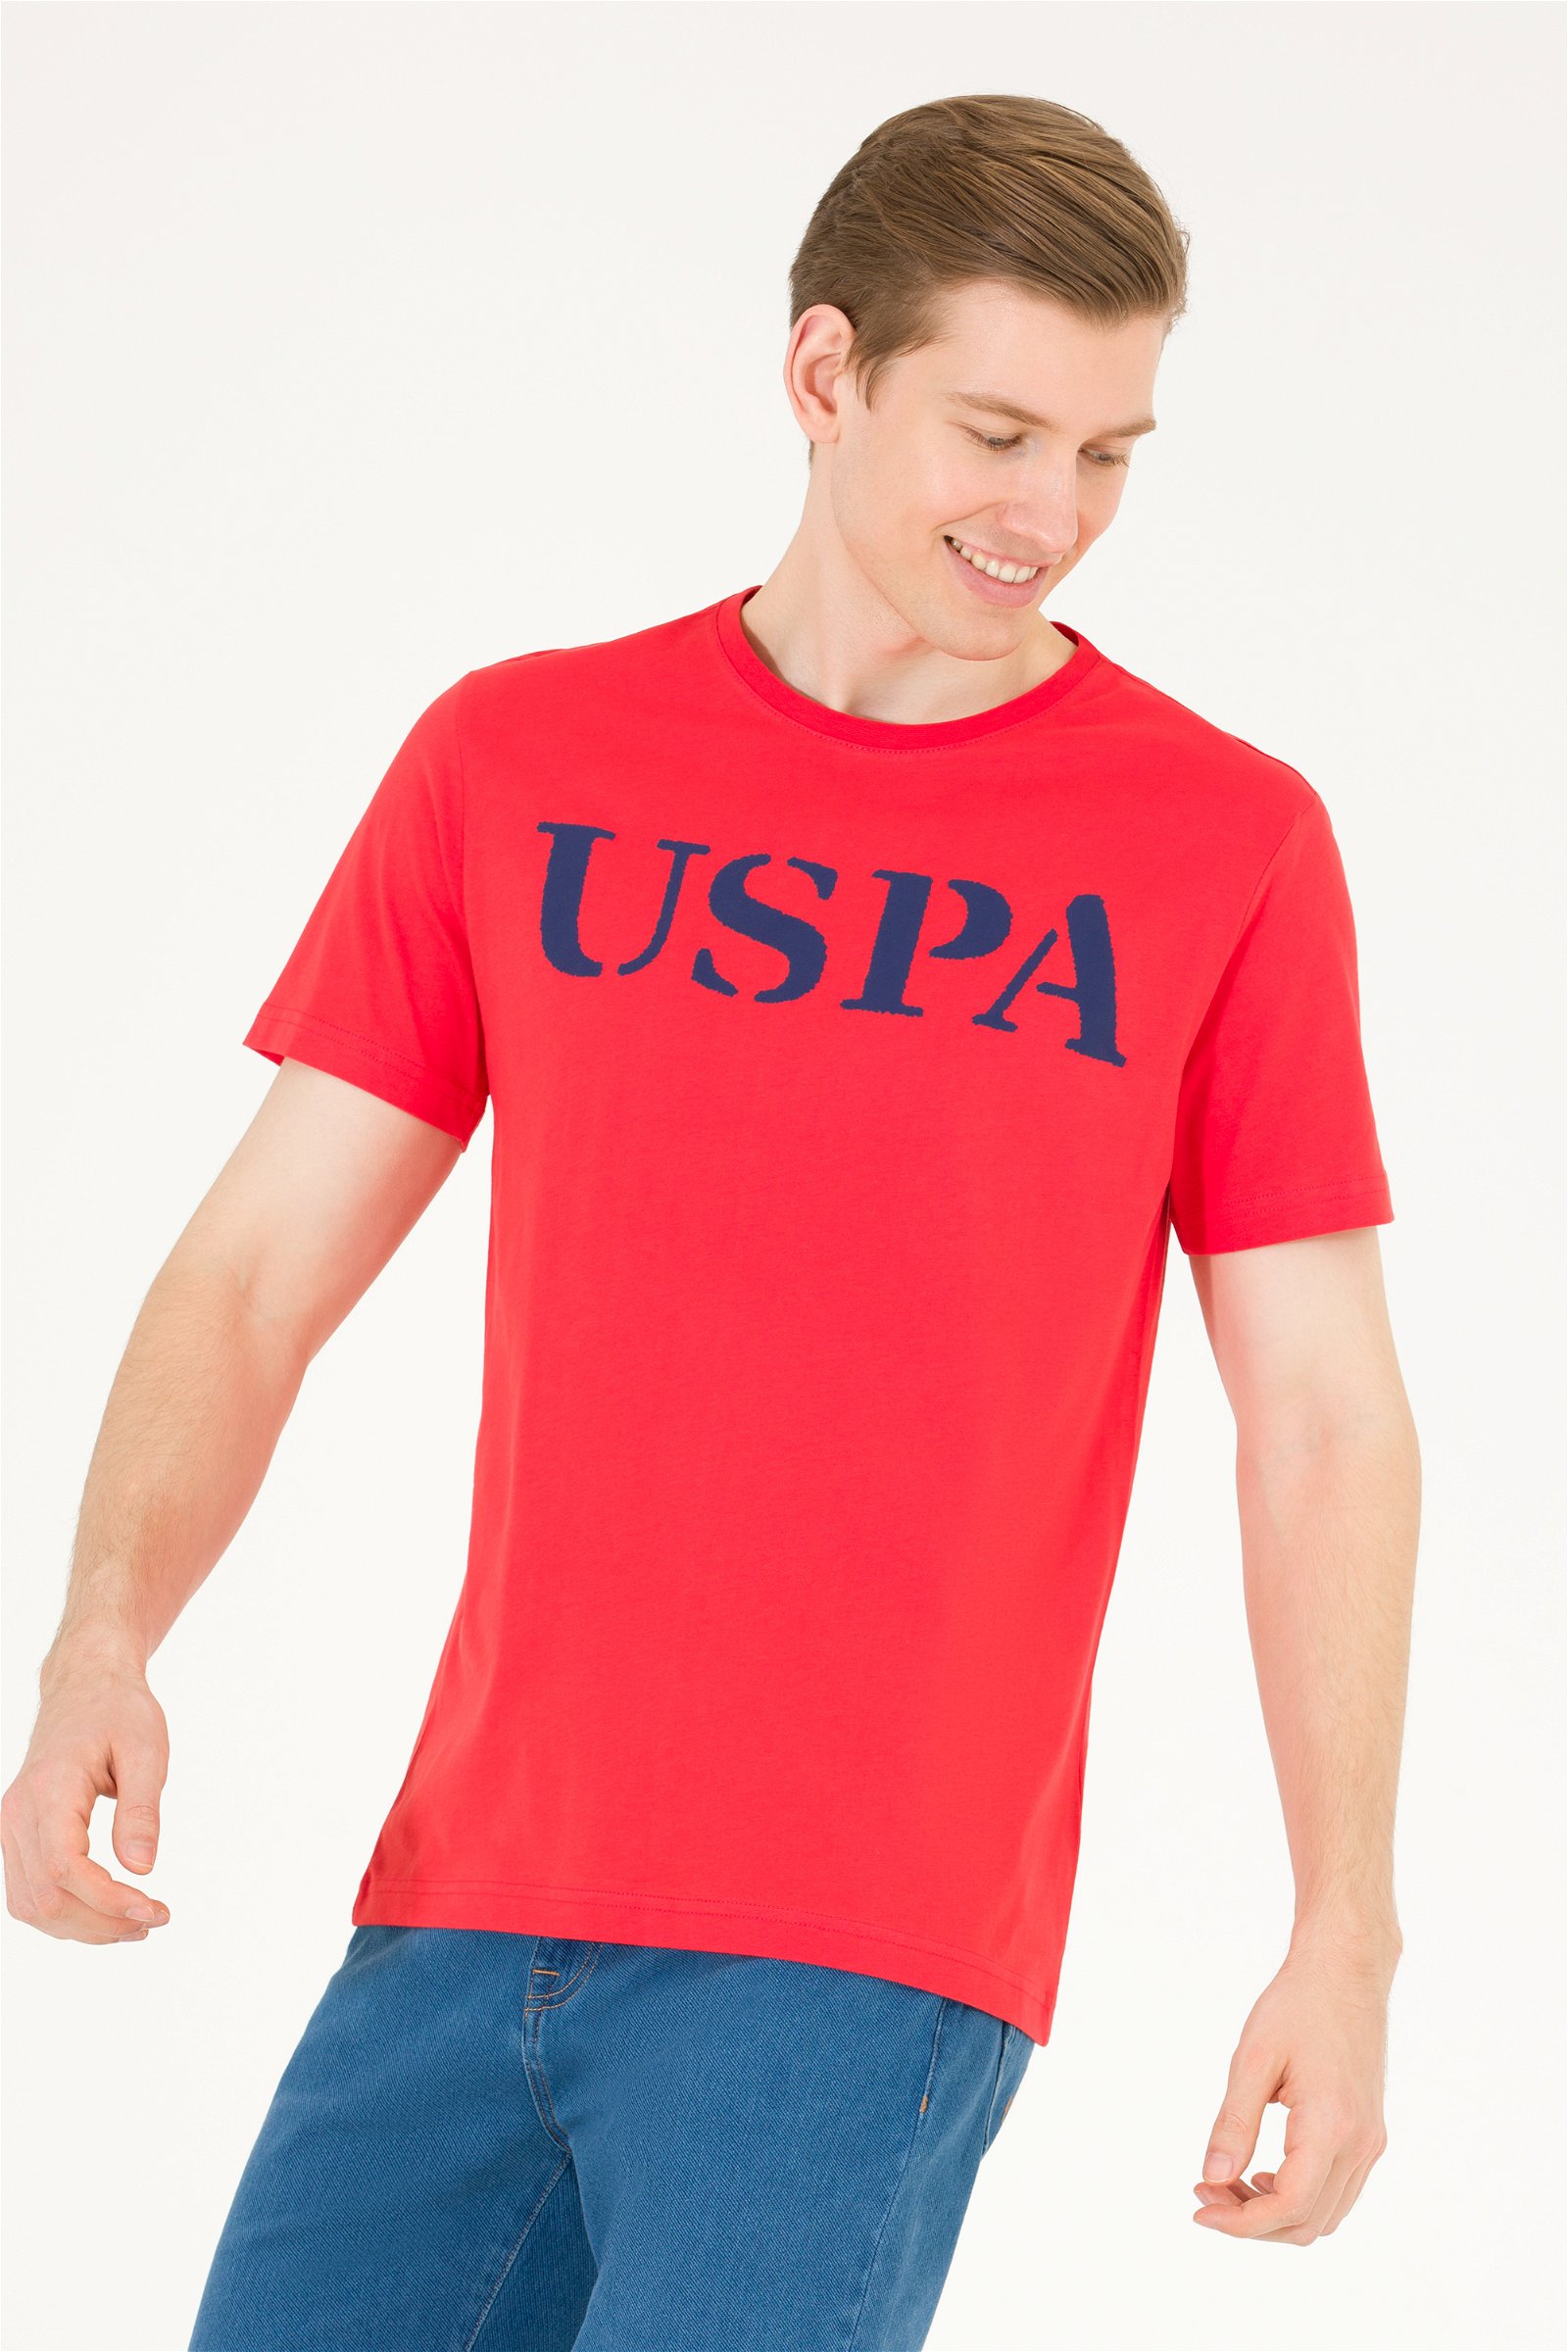 تی شرت یقه گرد قرمز  رگولار آستین کوتاه مردانه یو اس پولو | US POLO ASSN